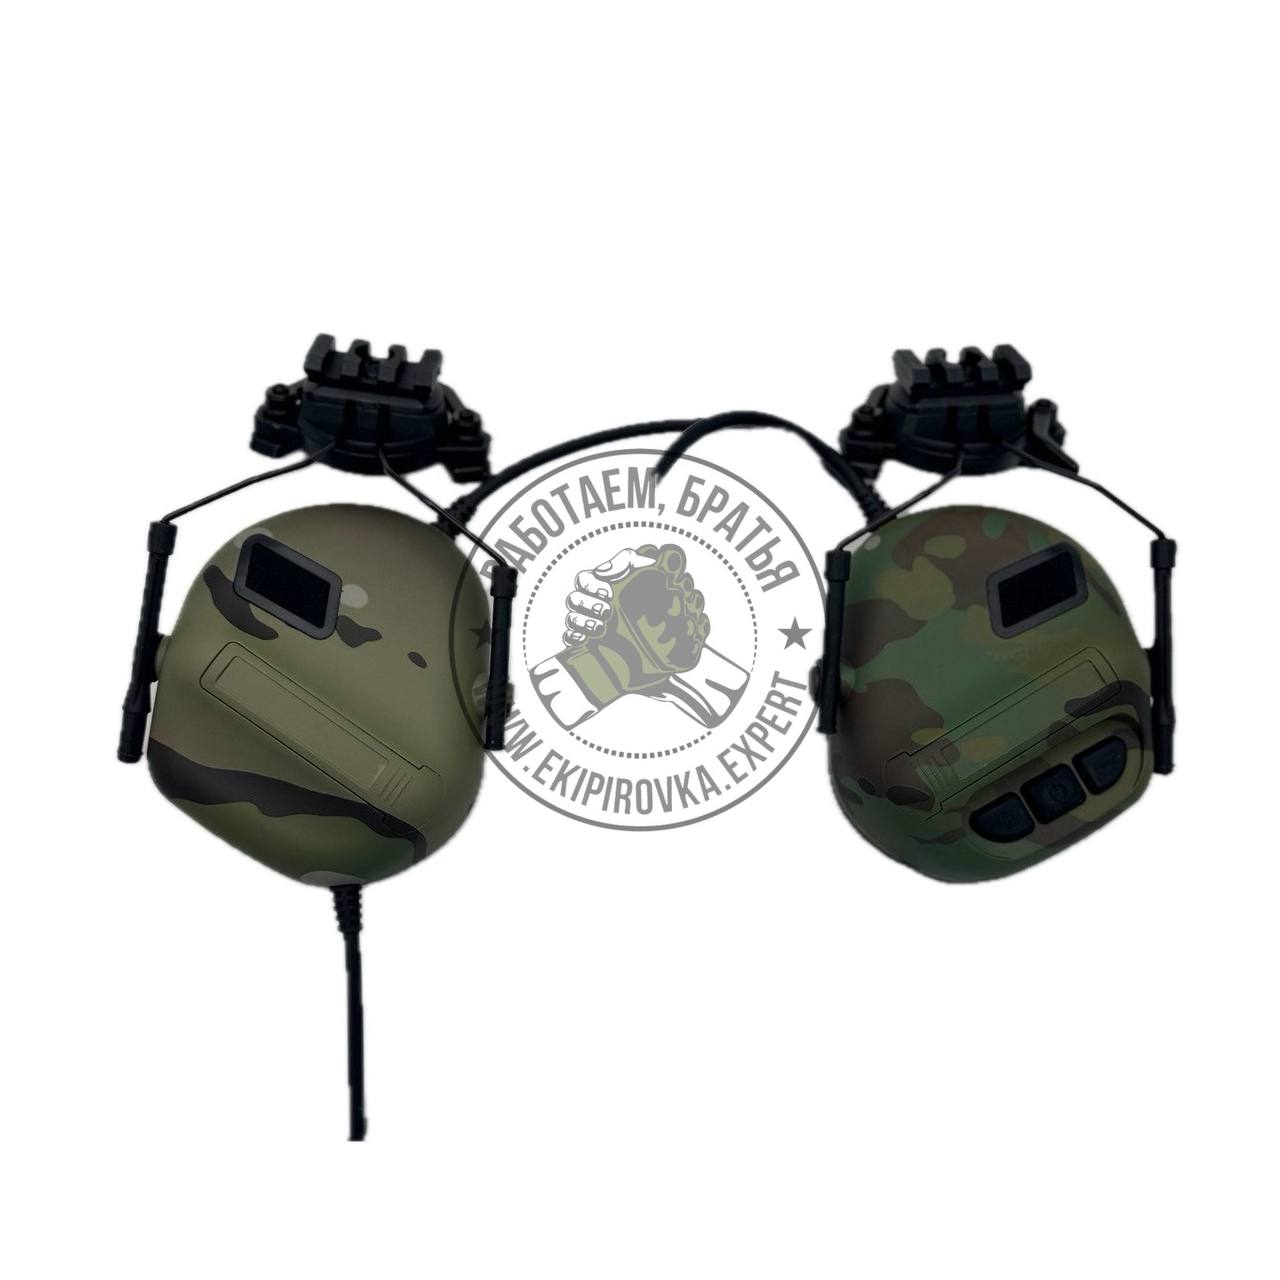 Наушники Communication HEDSET V helmet wear version версия с чебурашками